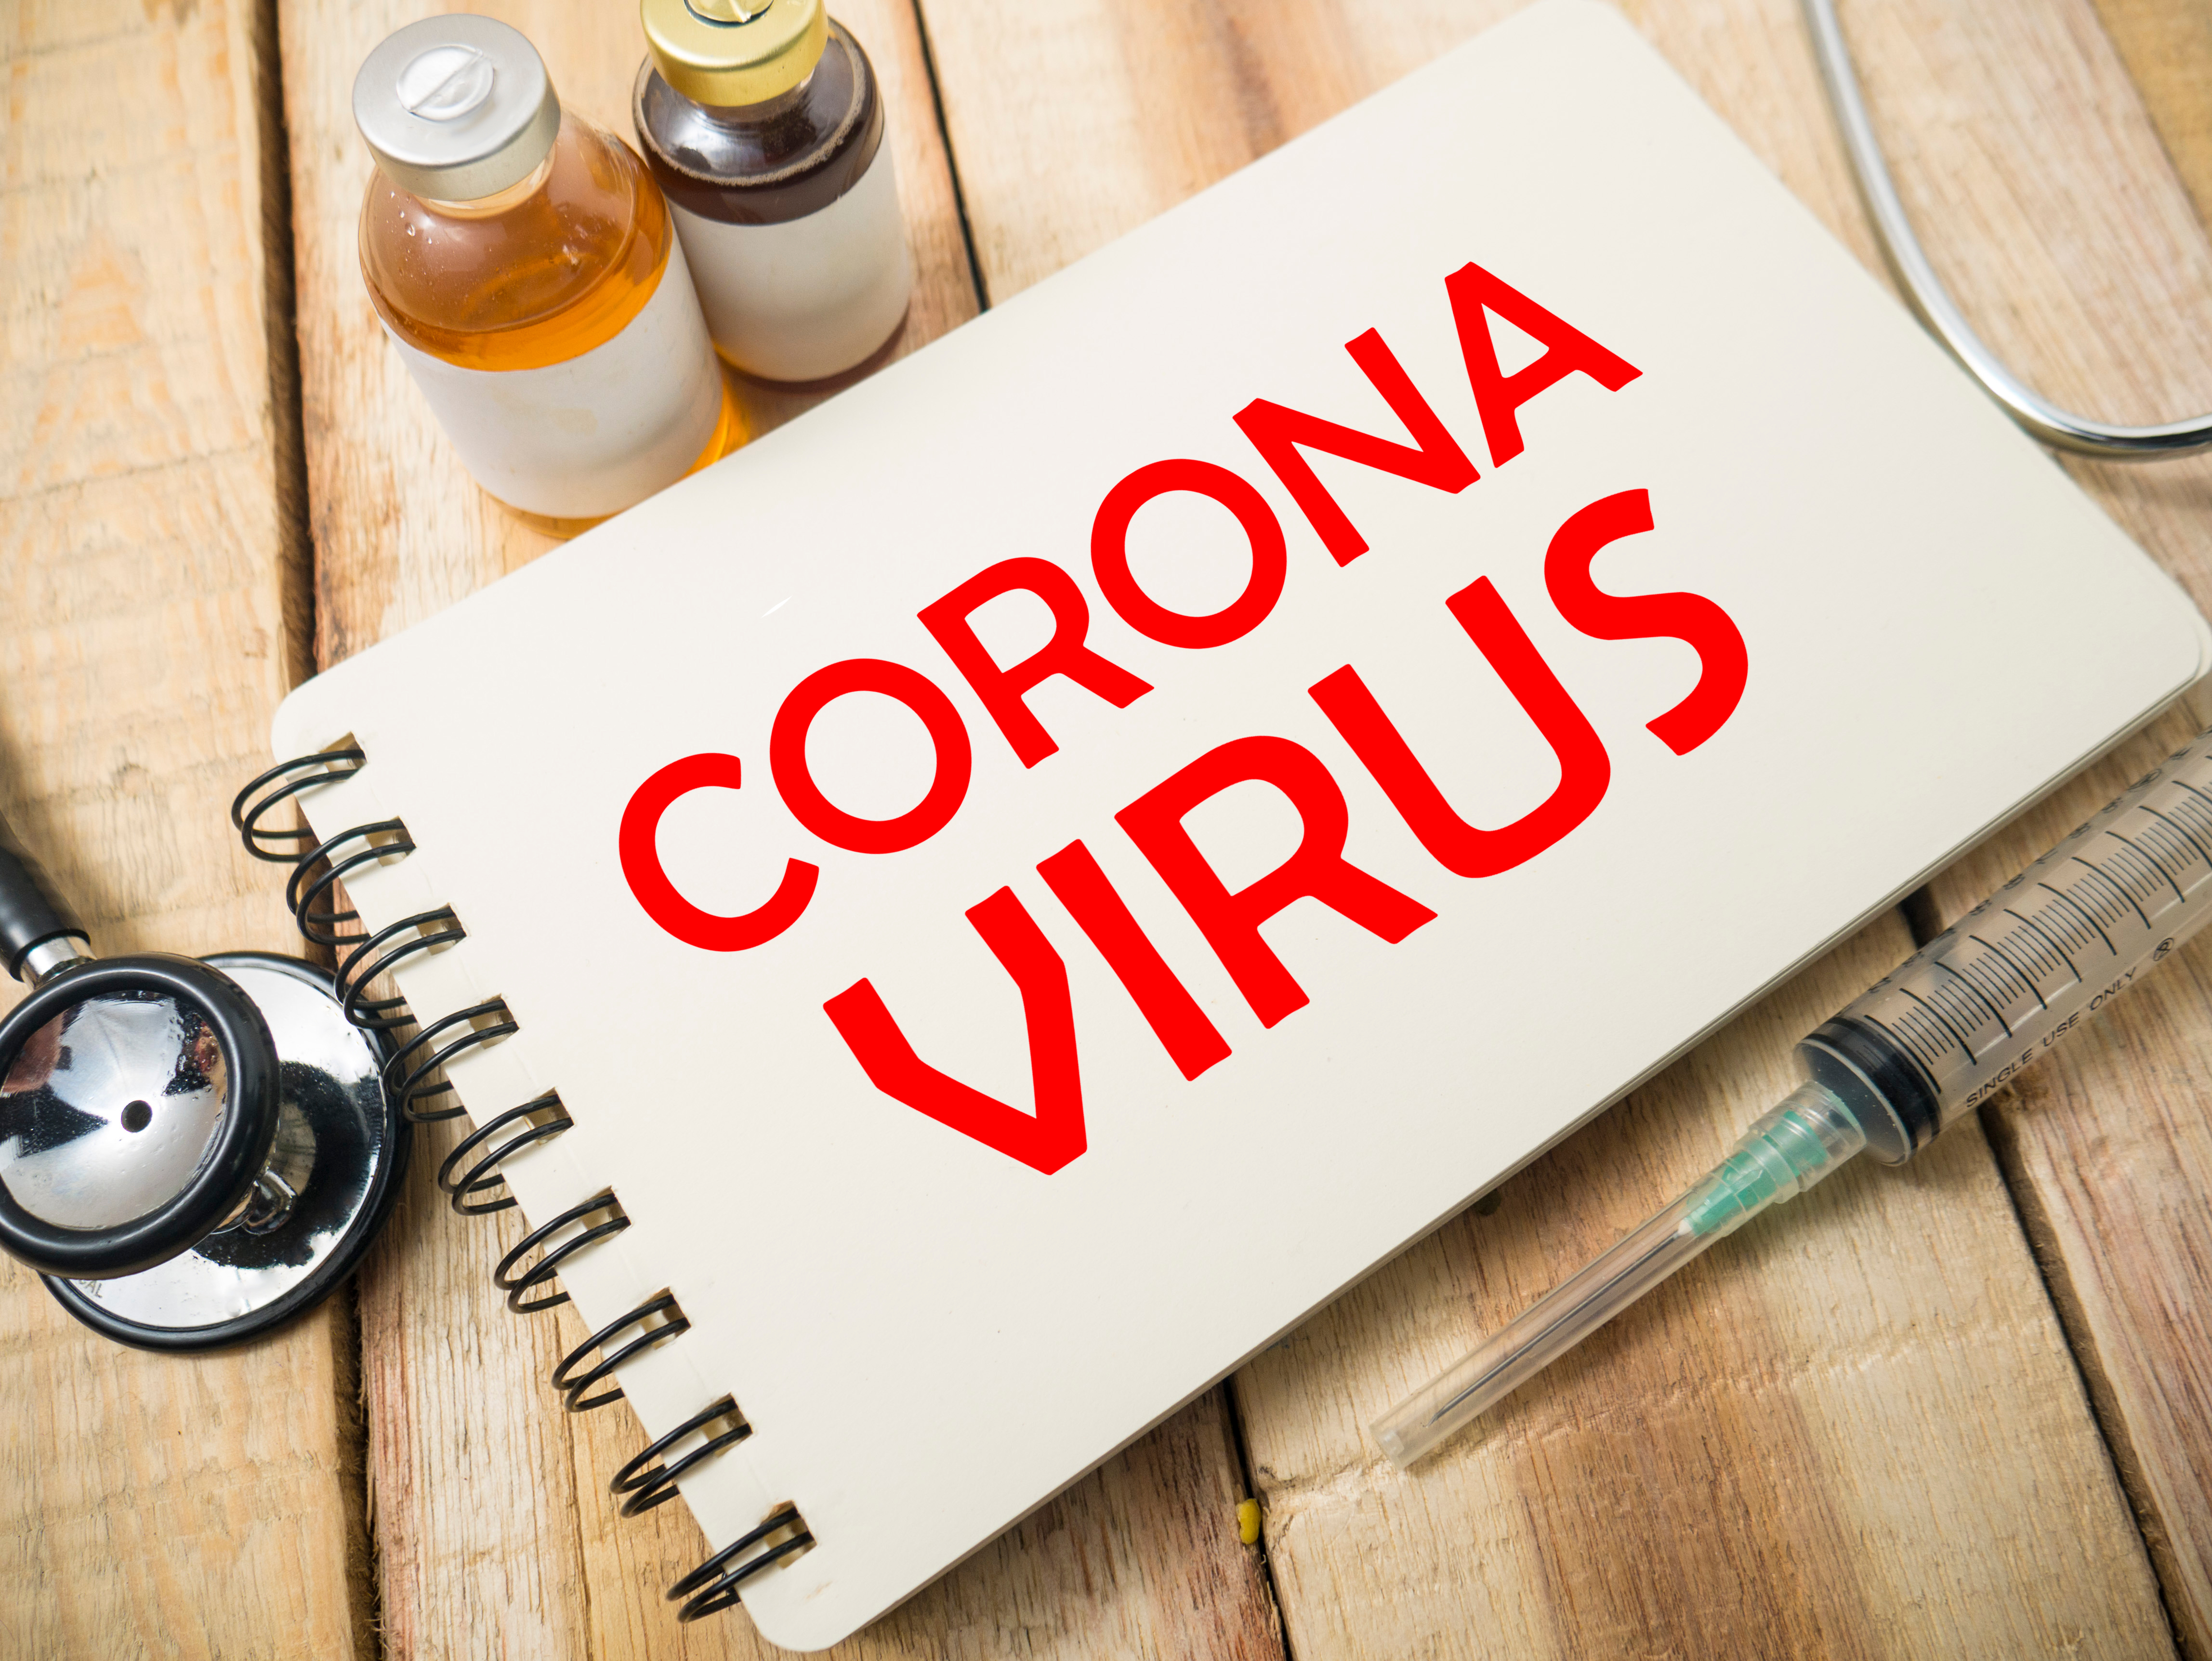 Sequoia warns startups of “turbulence” as coronavirus outbreak persists